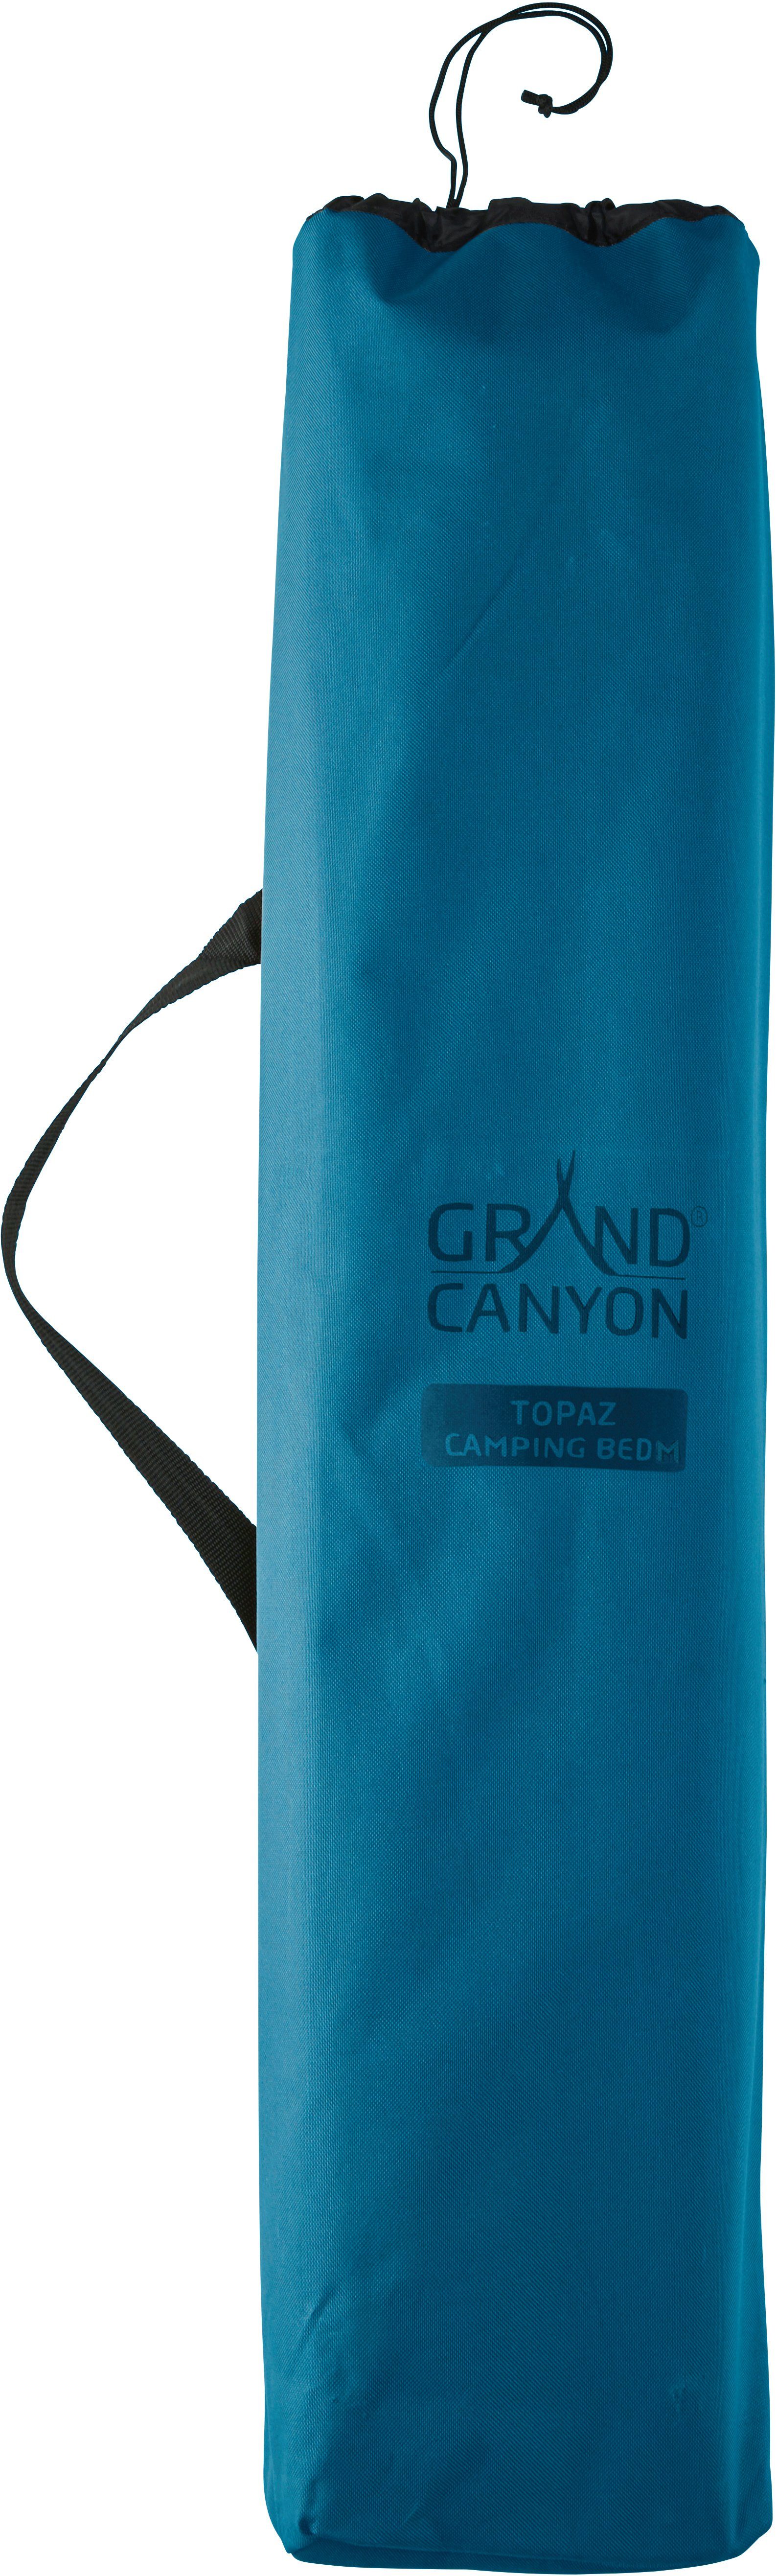 Feldbett blau TOPAZ CANYON GRAND BED CAMPING